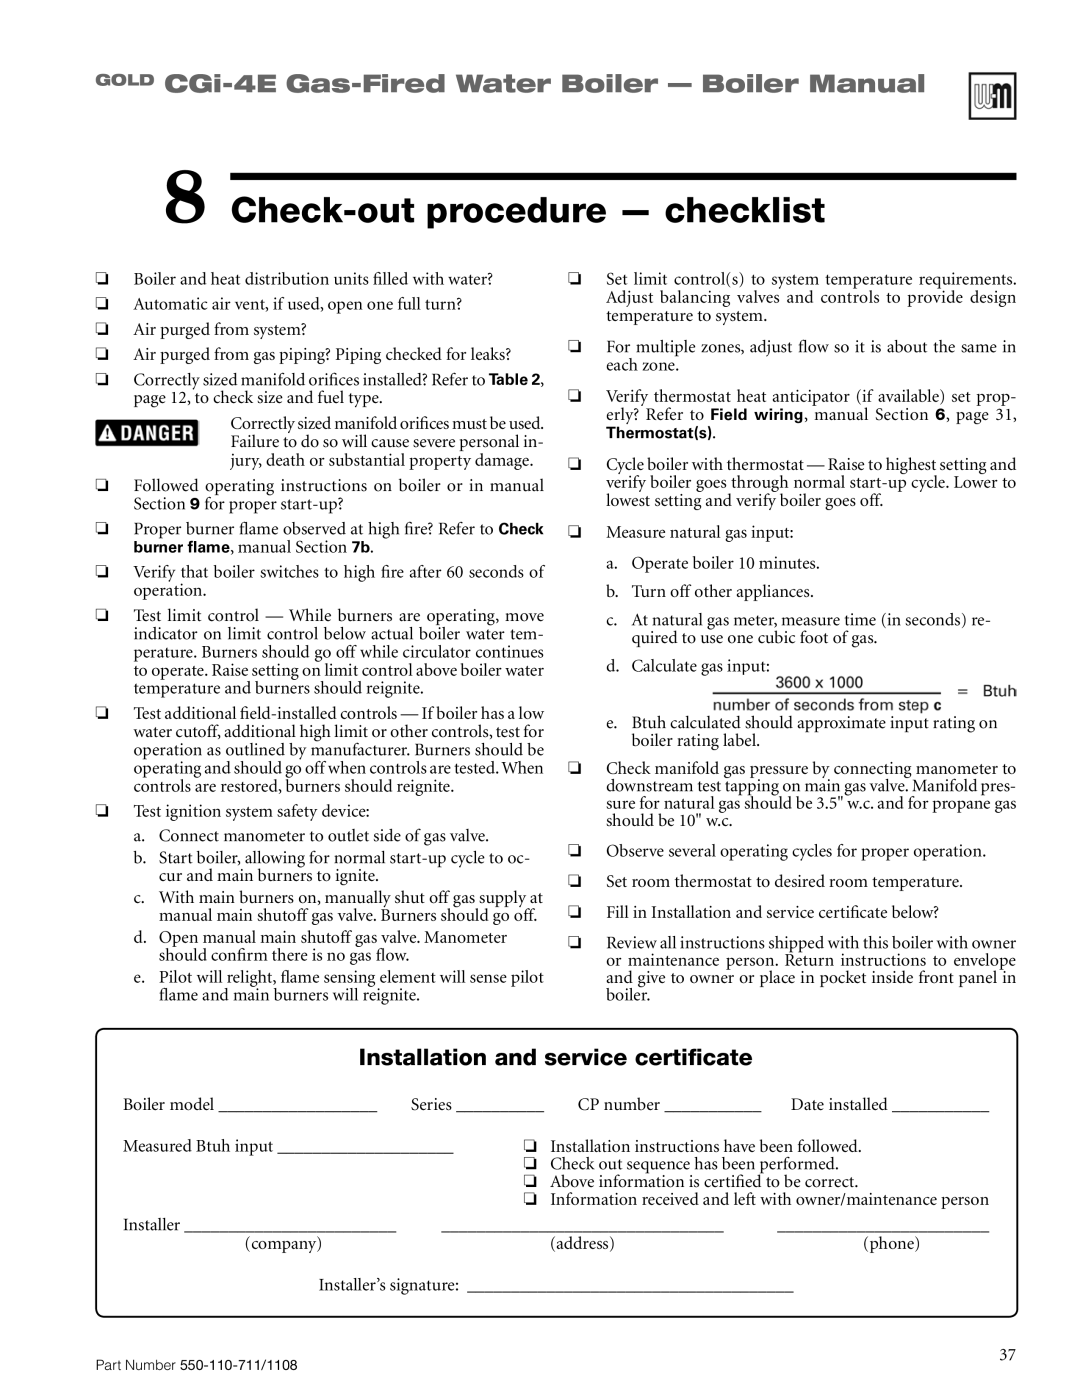 Weil-McLain CGI-4E manual Check-outprocedure - checklist, GOLD CGi-4E Gas-FiredWater Boiler - Boiler Manual 